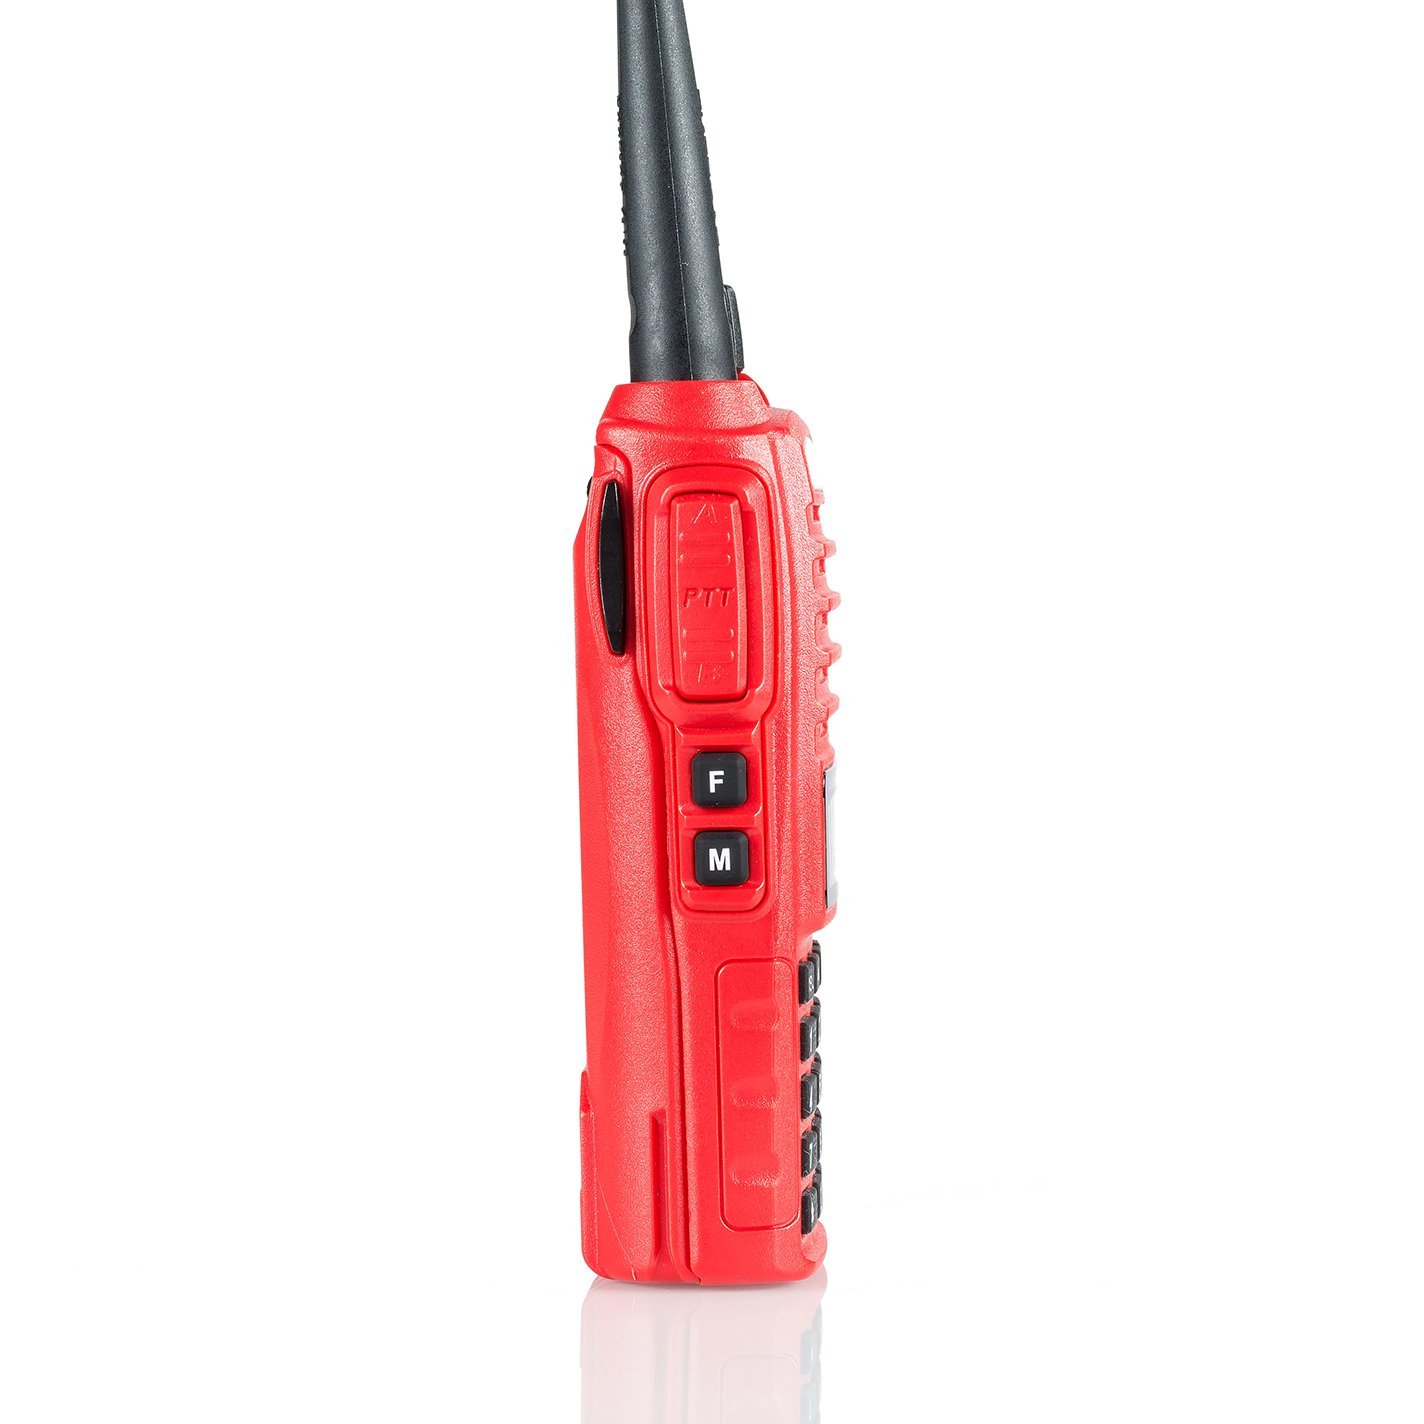 BaoFeng UV-82HP (RED) High Power Dual Band Radio: 136-174mhz (VHF) 400-520mhz (UHF) Amateur (Ham) Portable Two-Way